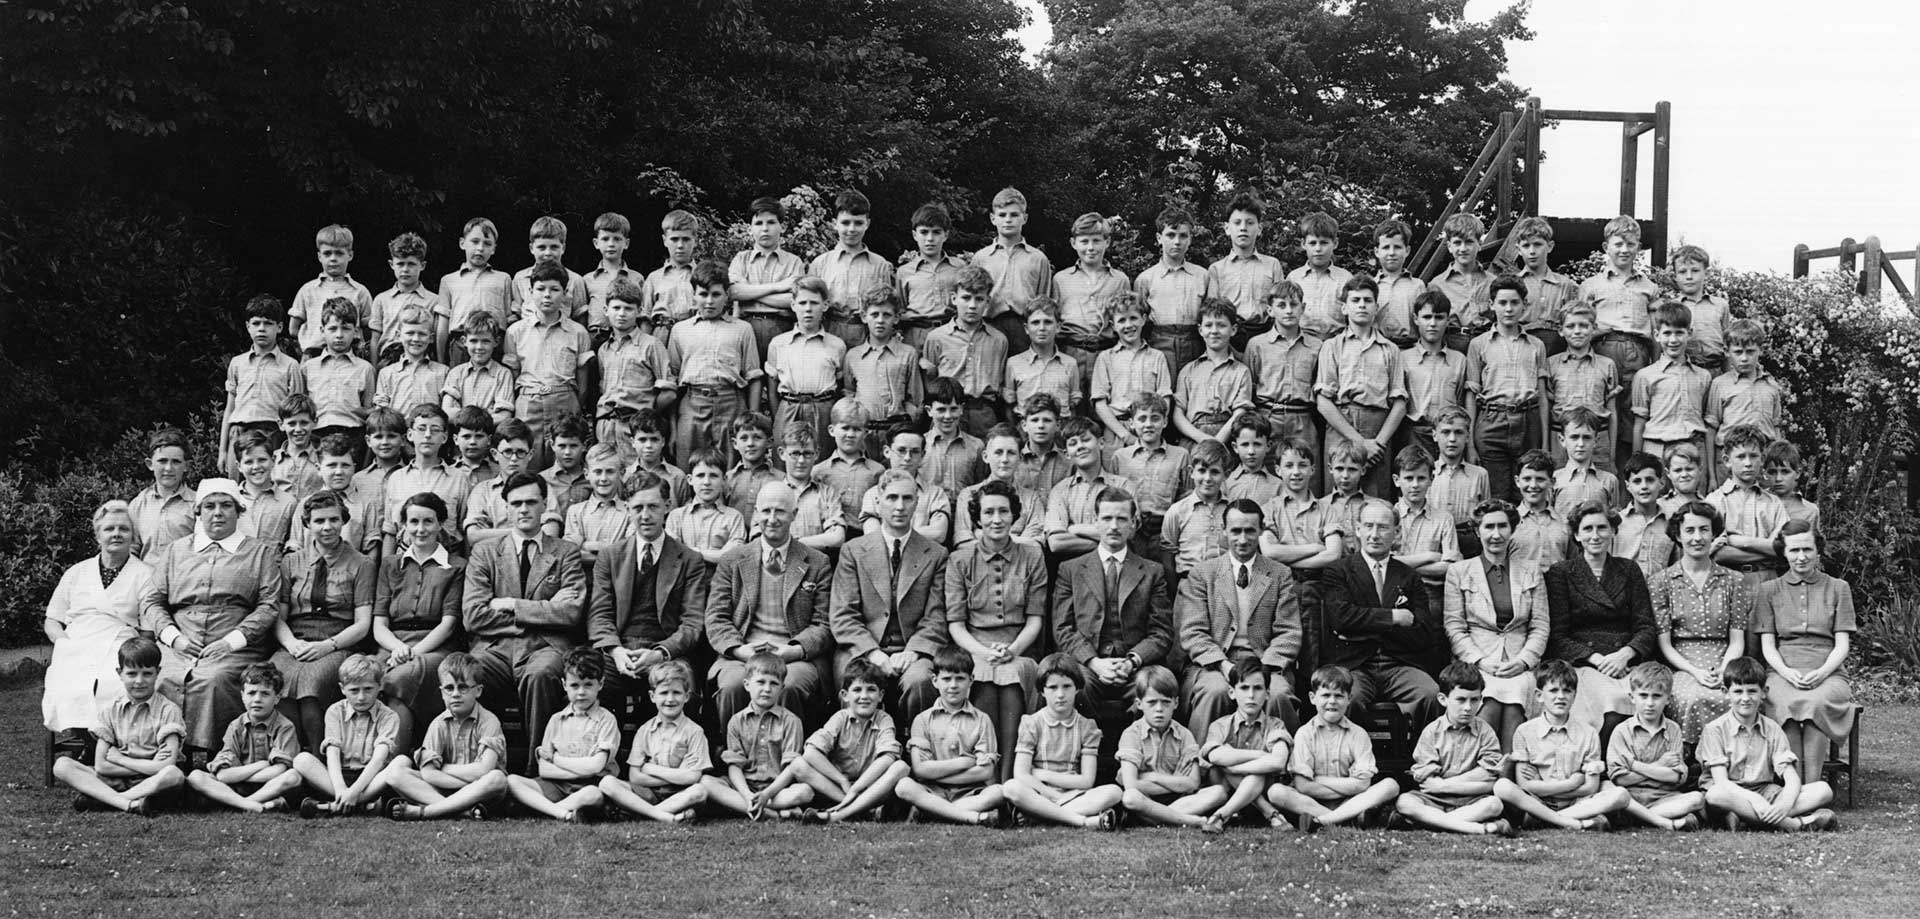 Hillstone school circa 1945